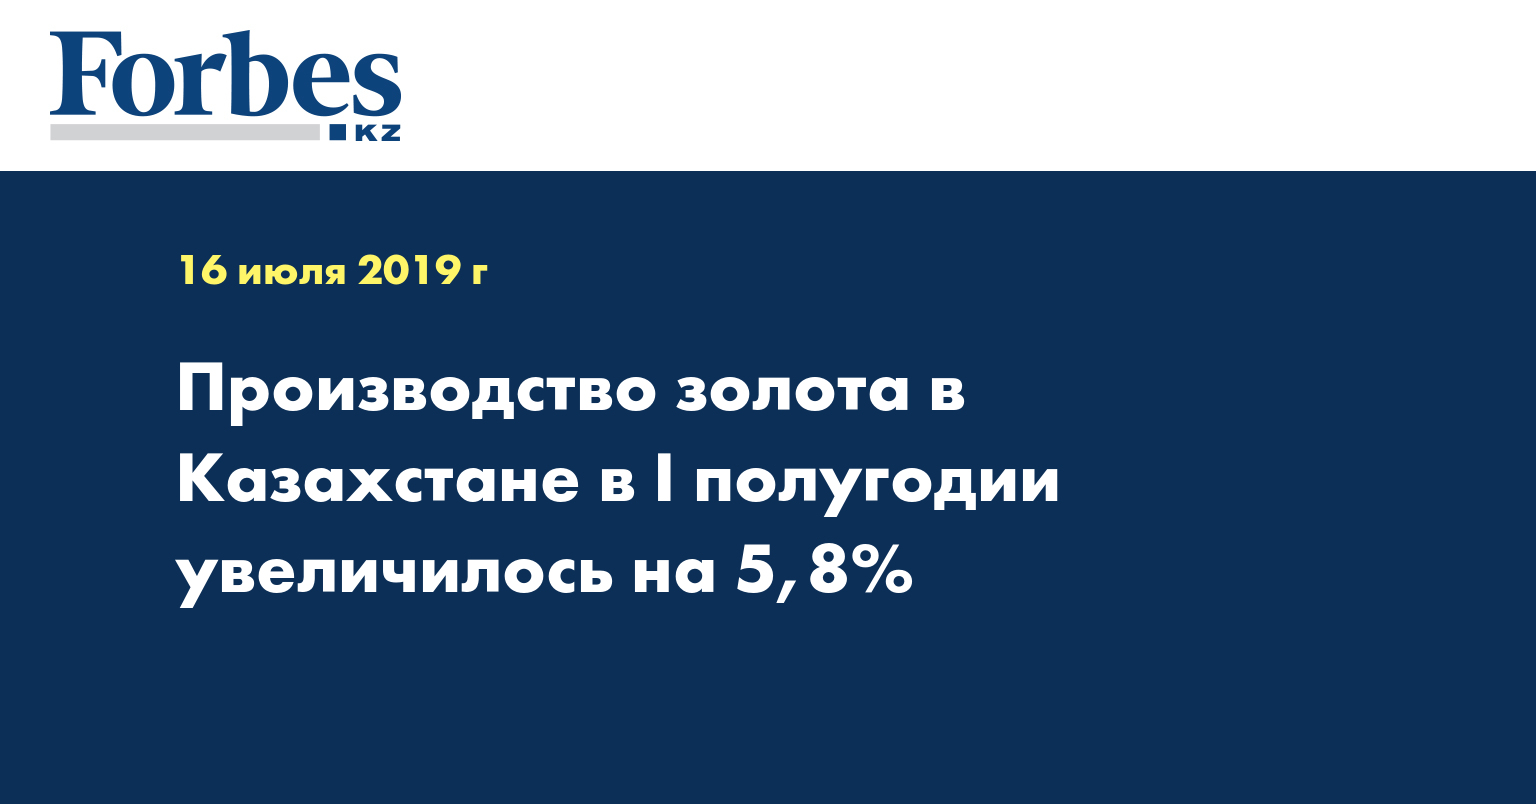 Производство золота в Казахстане в I полугодии увеличилось на 5,8%